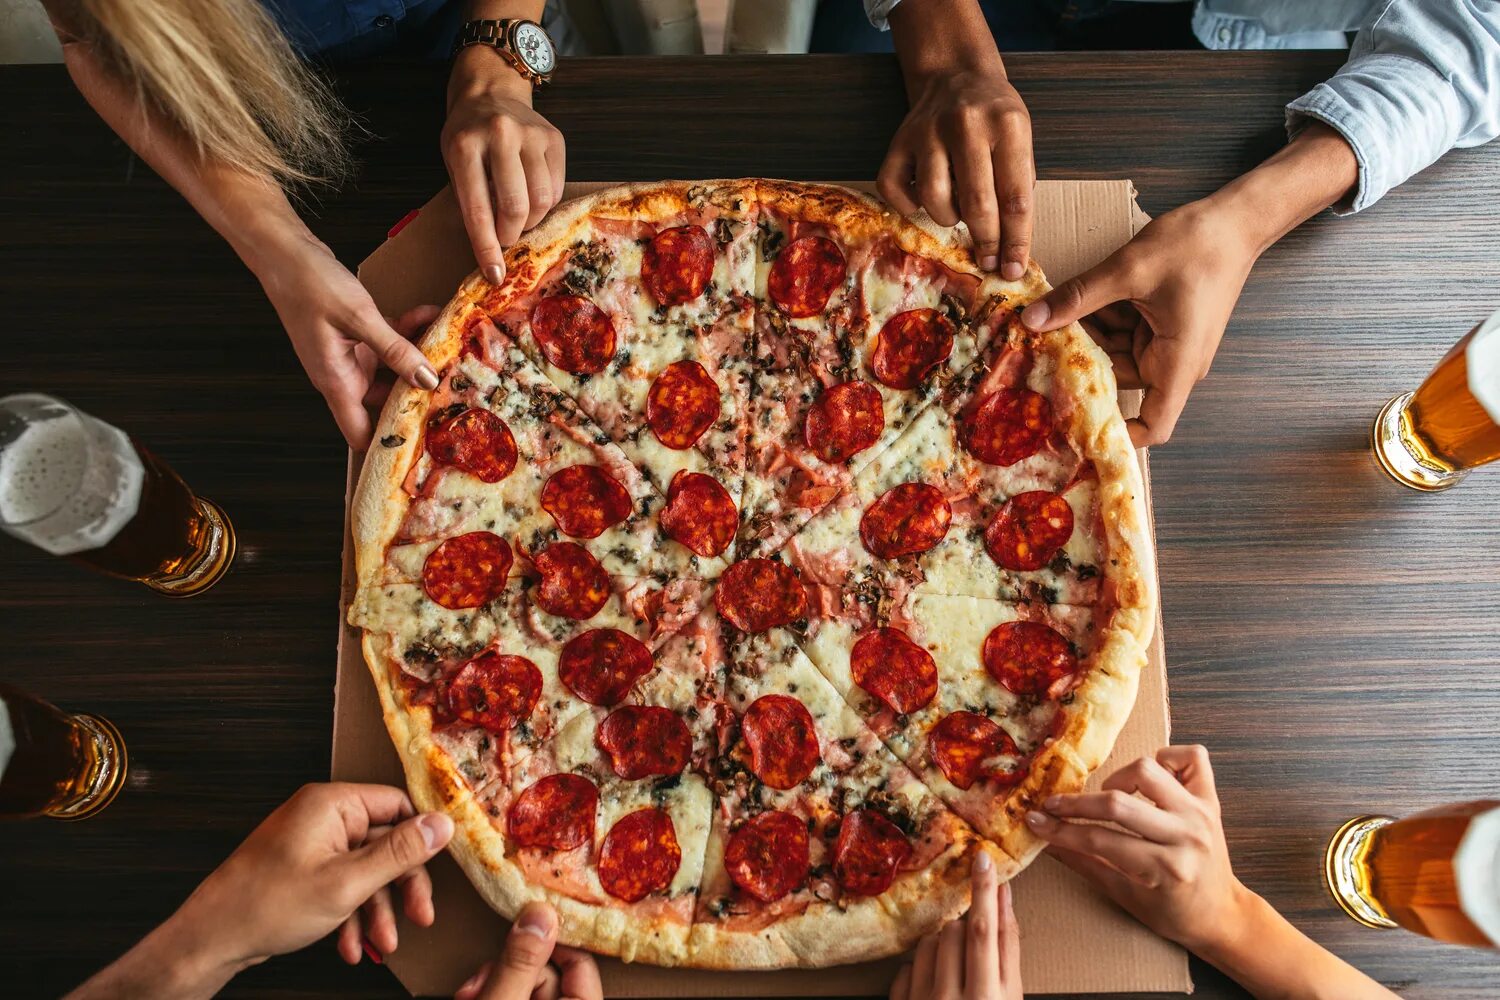 Пицца раскрывающая судьбу хорошая пицца. Красивая пицца. Пицца пепперони. Самая вкусная пицца. Самая красивая пицца.